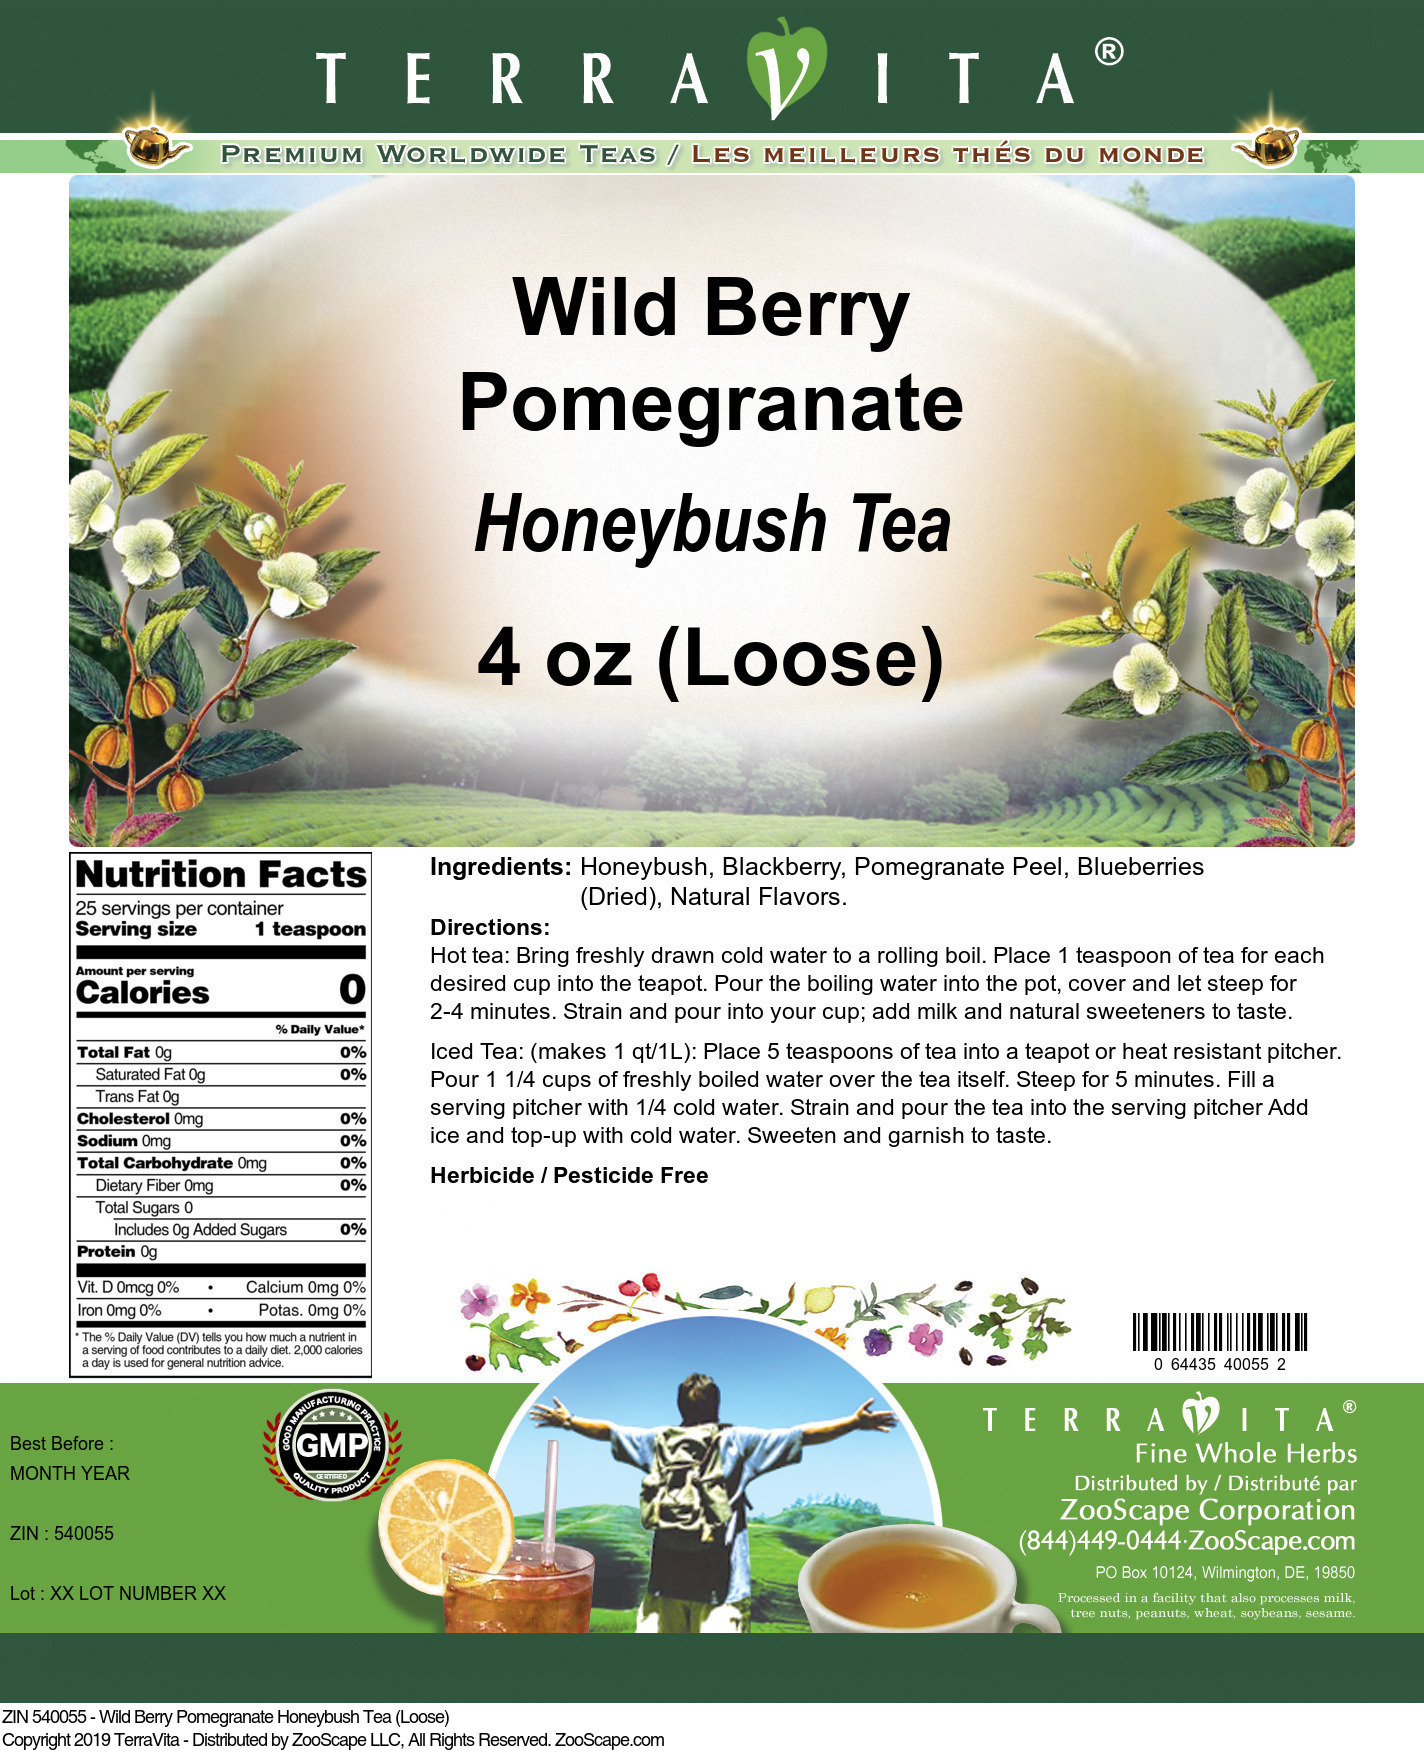 Wild Berry Pomegranate Honeybush Tea (Loose) - Label